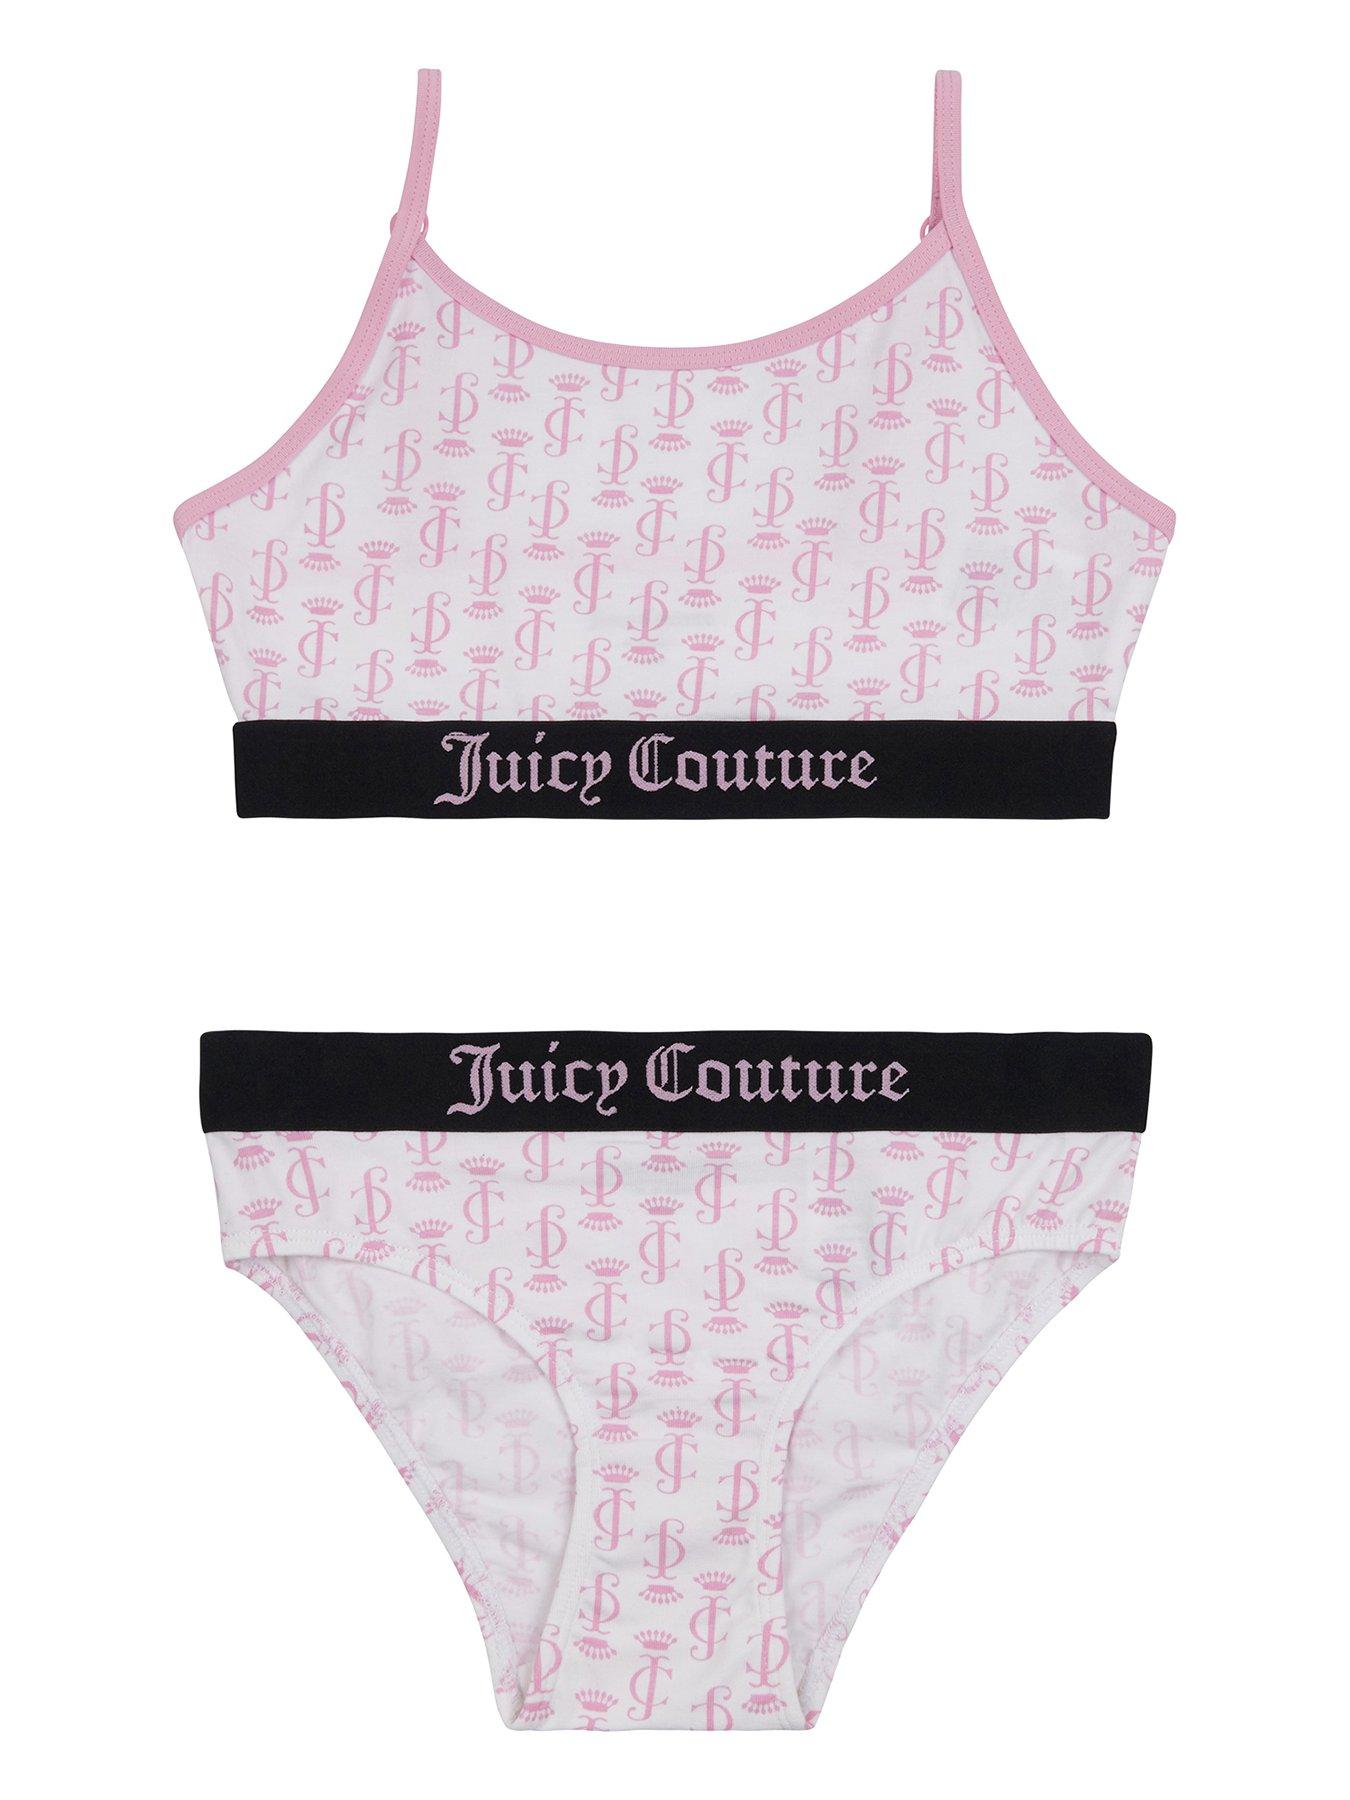 Buy Juicy Couture women plus size 5 pcs brand logo underwear panties pink  blue black combo Online